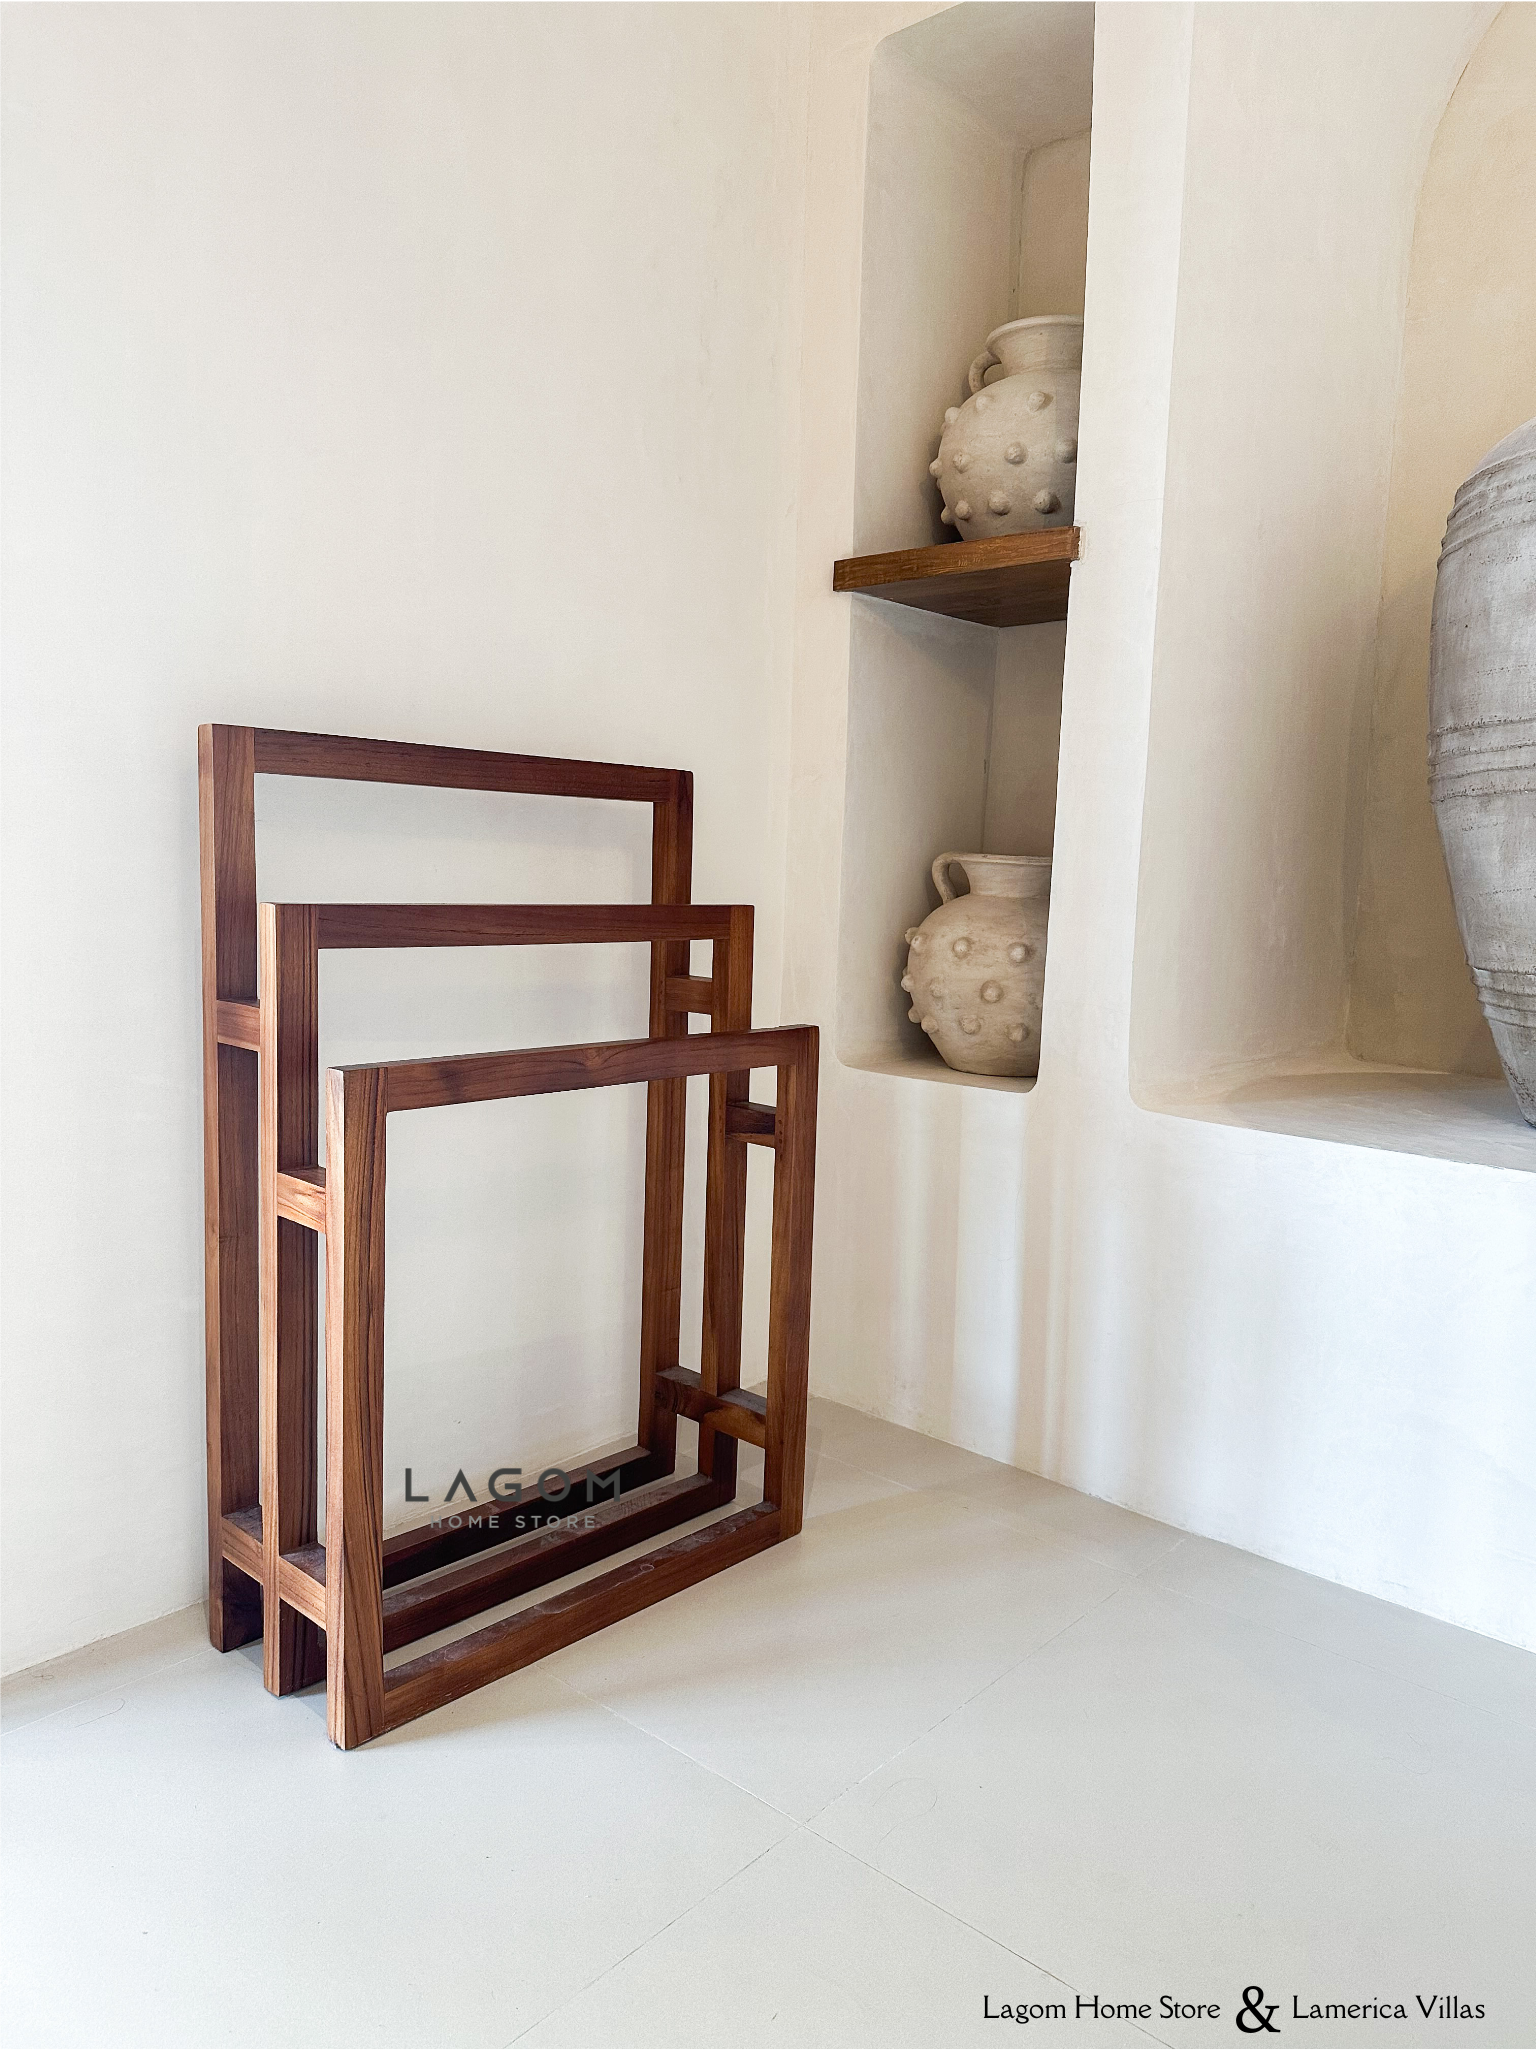 Rak Handuk Berundak Handmade dari Kayu Jati Solid Towel Rack Lagom Home Store Jati Furnitur Teak Furniture Jakarta